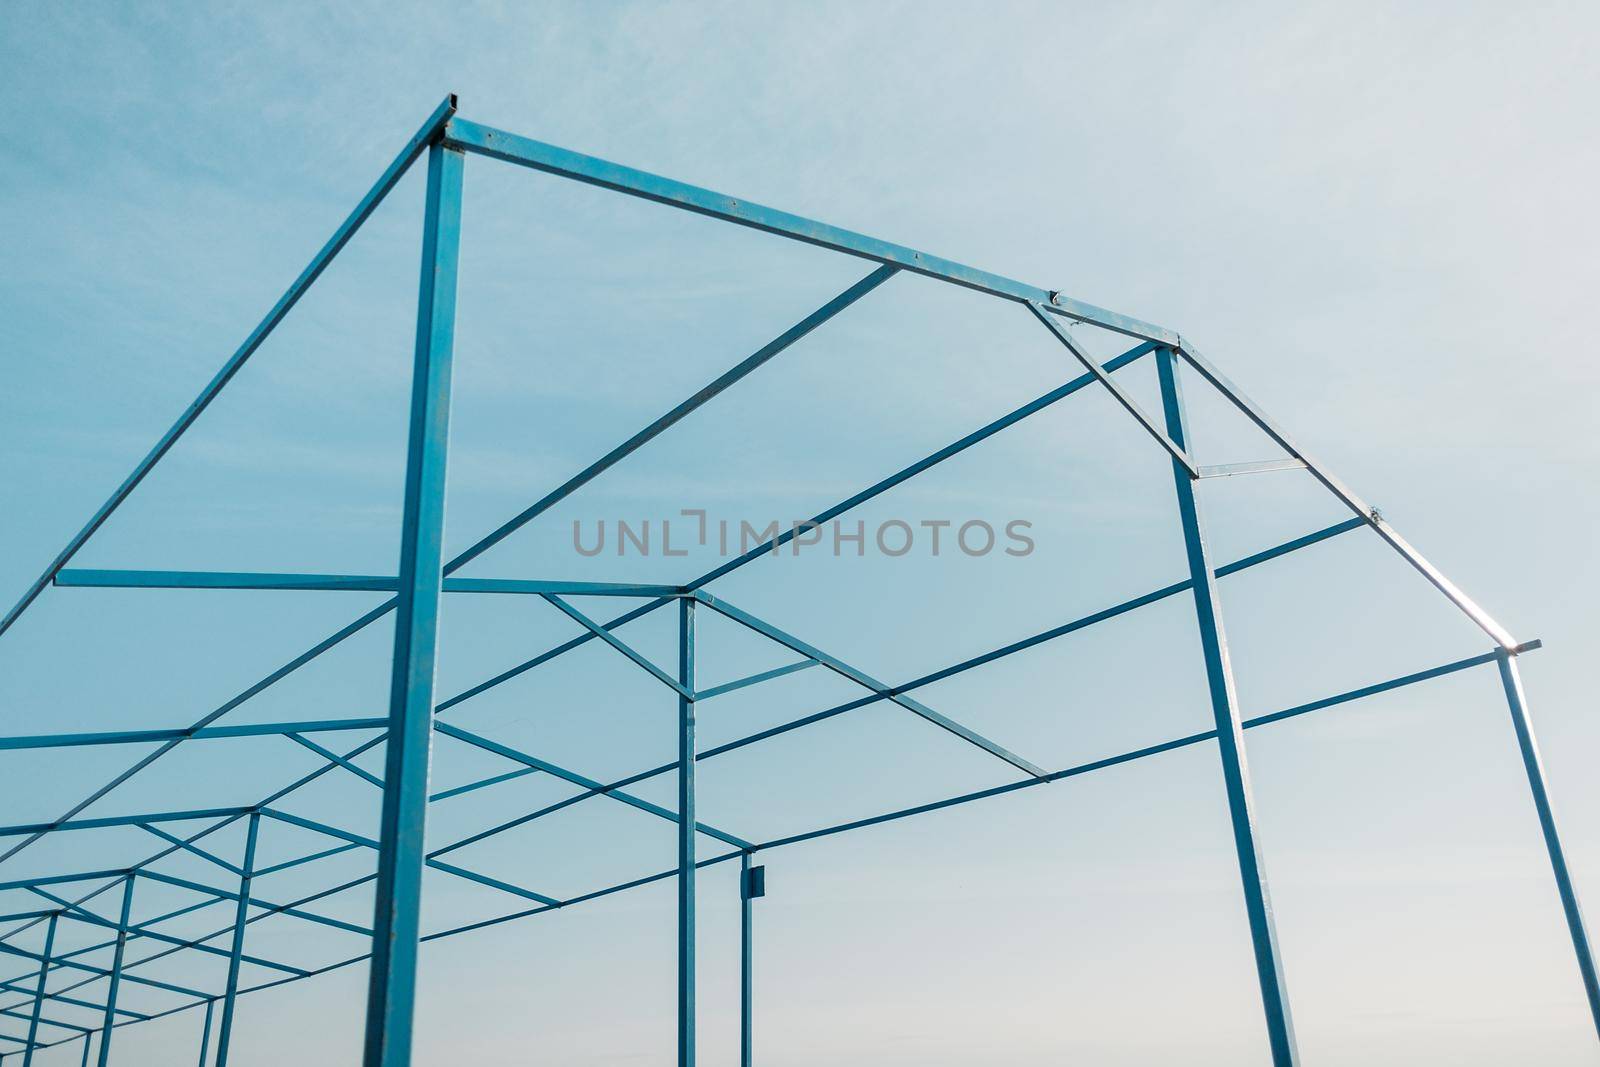 Minimalistic geometric metal construction on the sky background.